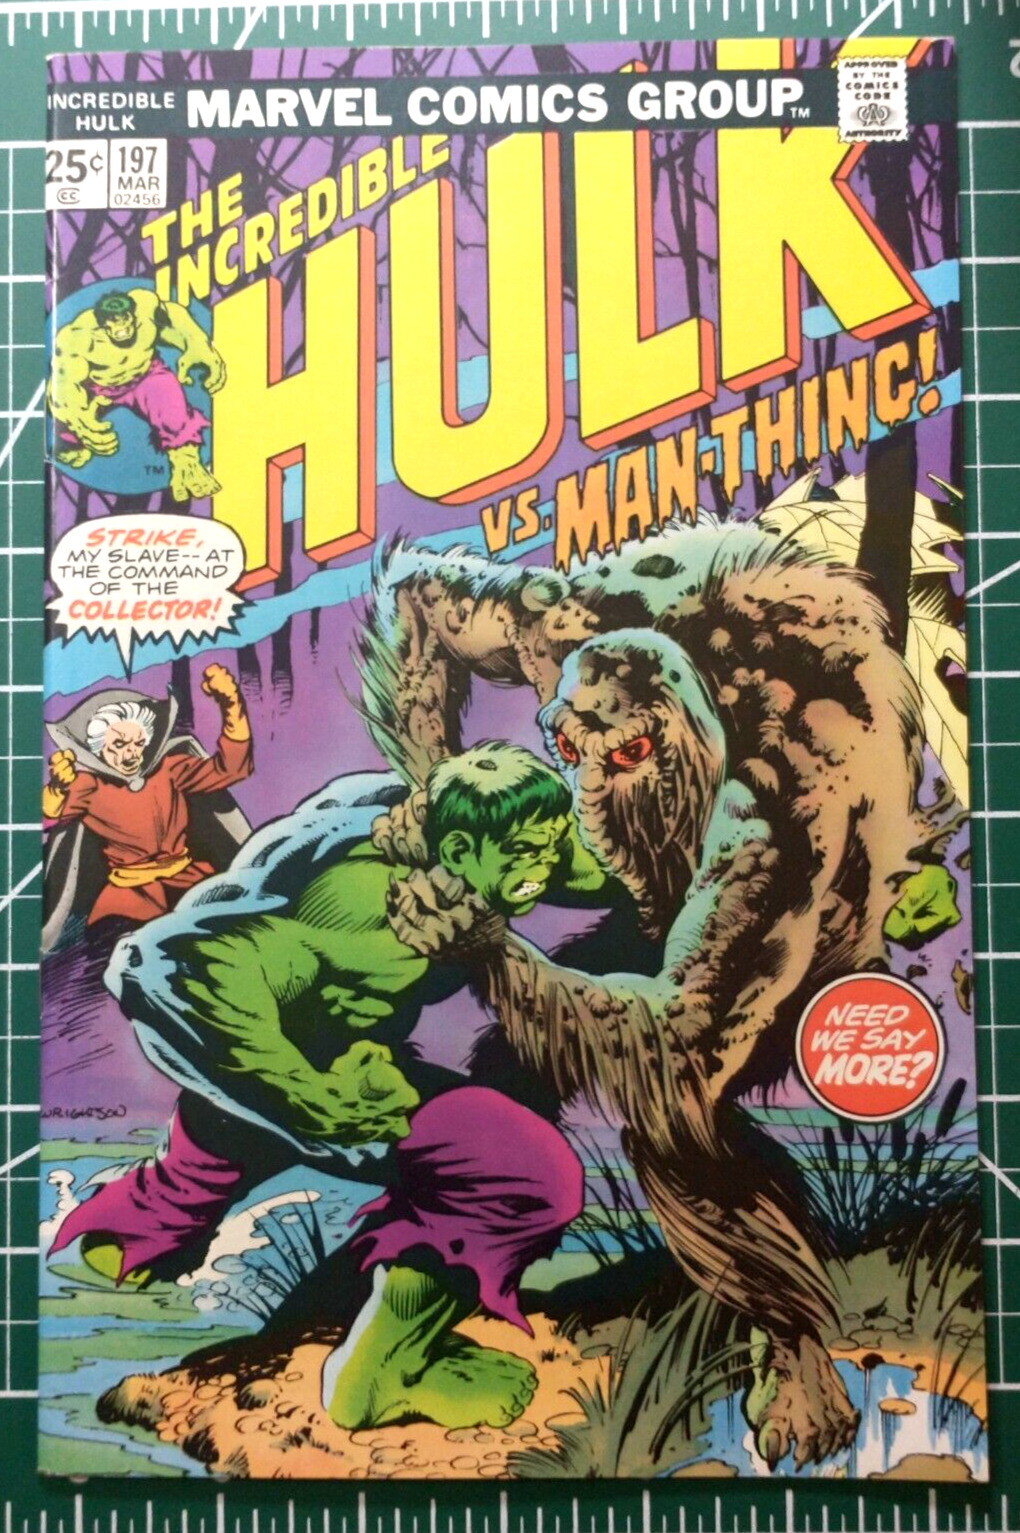 The Incredible Hulk #197 Bernie Wrightson Cover Man-Thing MVS Intact Marvel MCU